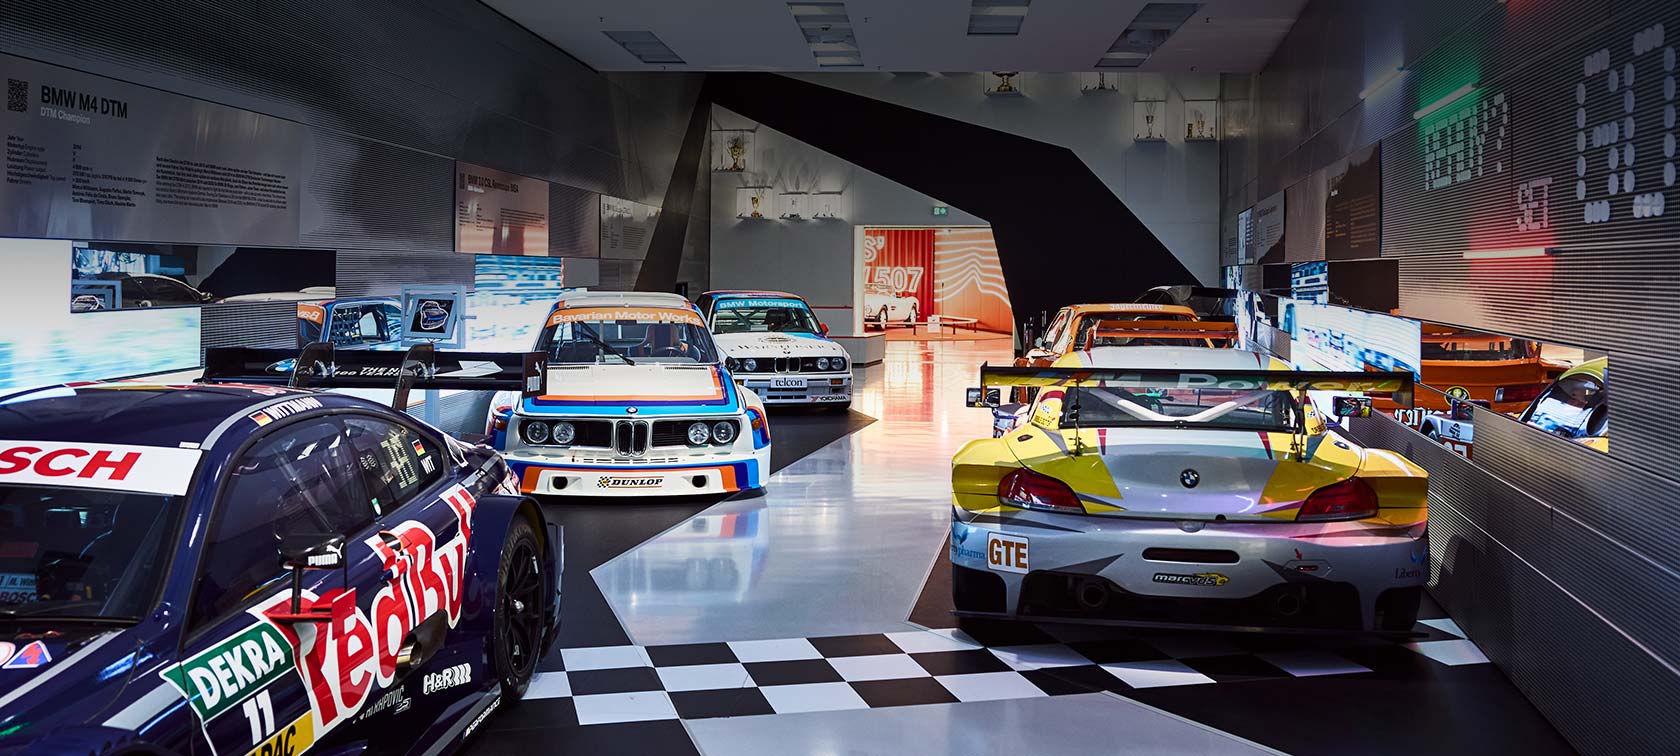 DTM Fahrzeuge der BMW Motorsport Serie im BMW Museum